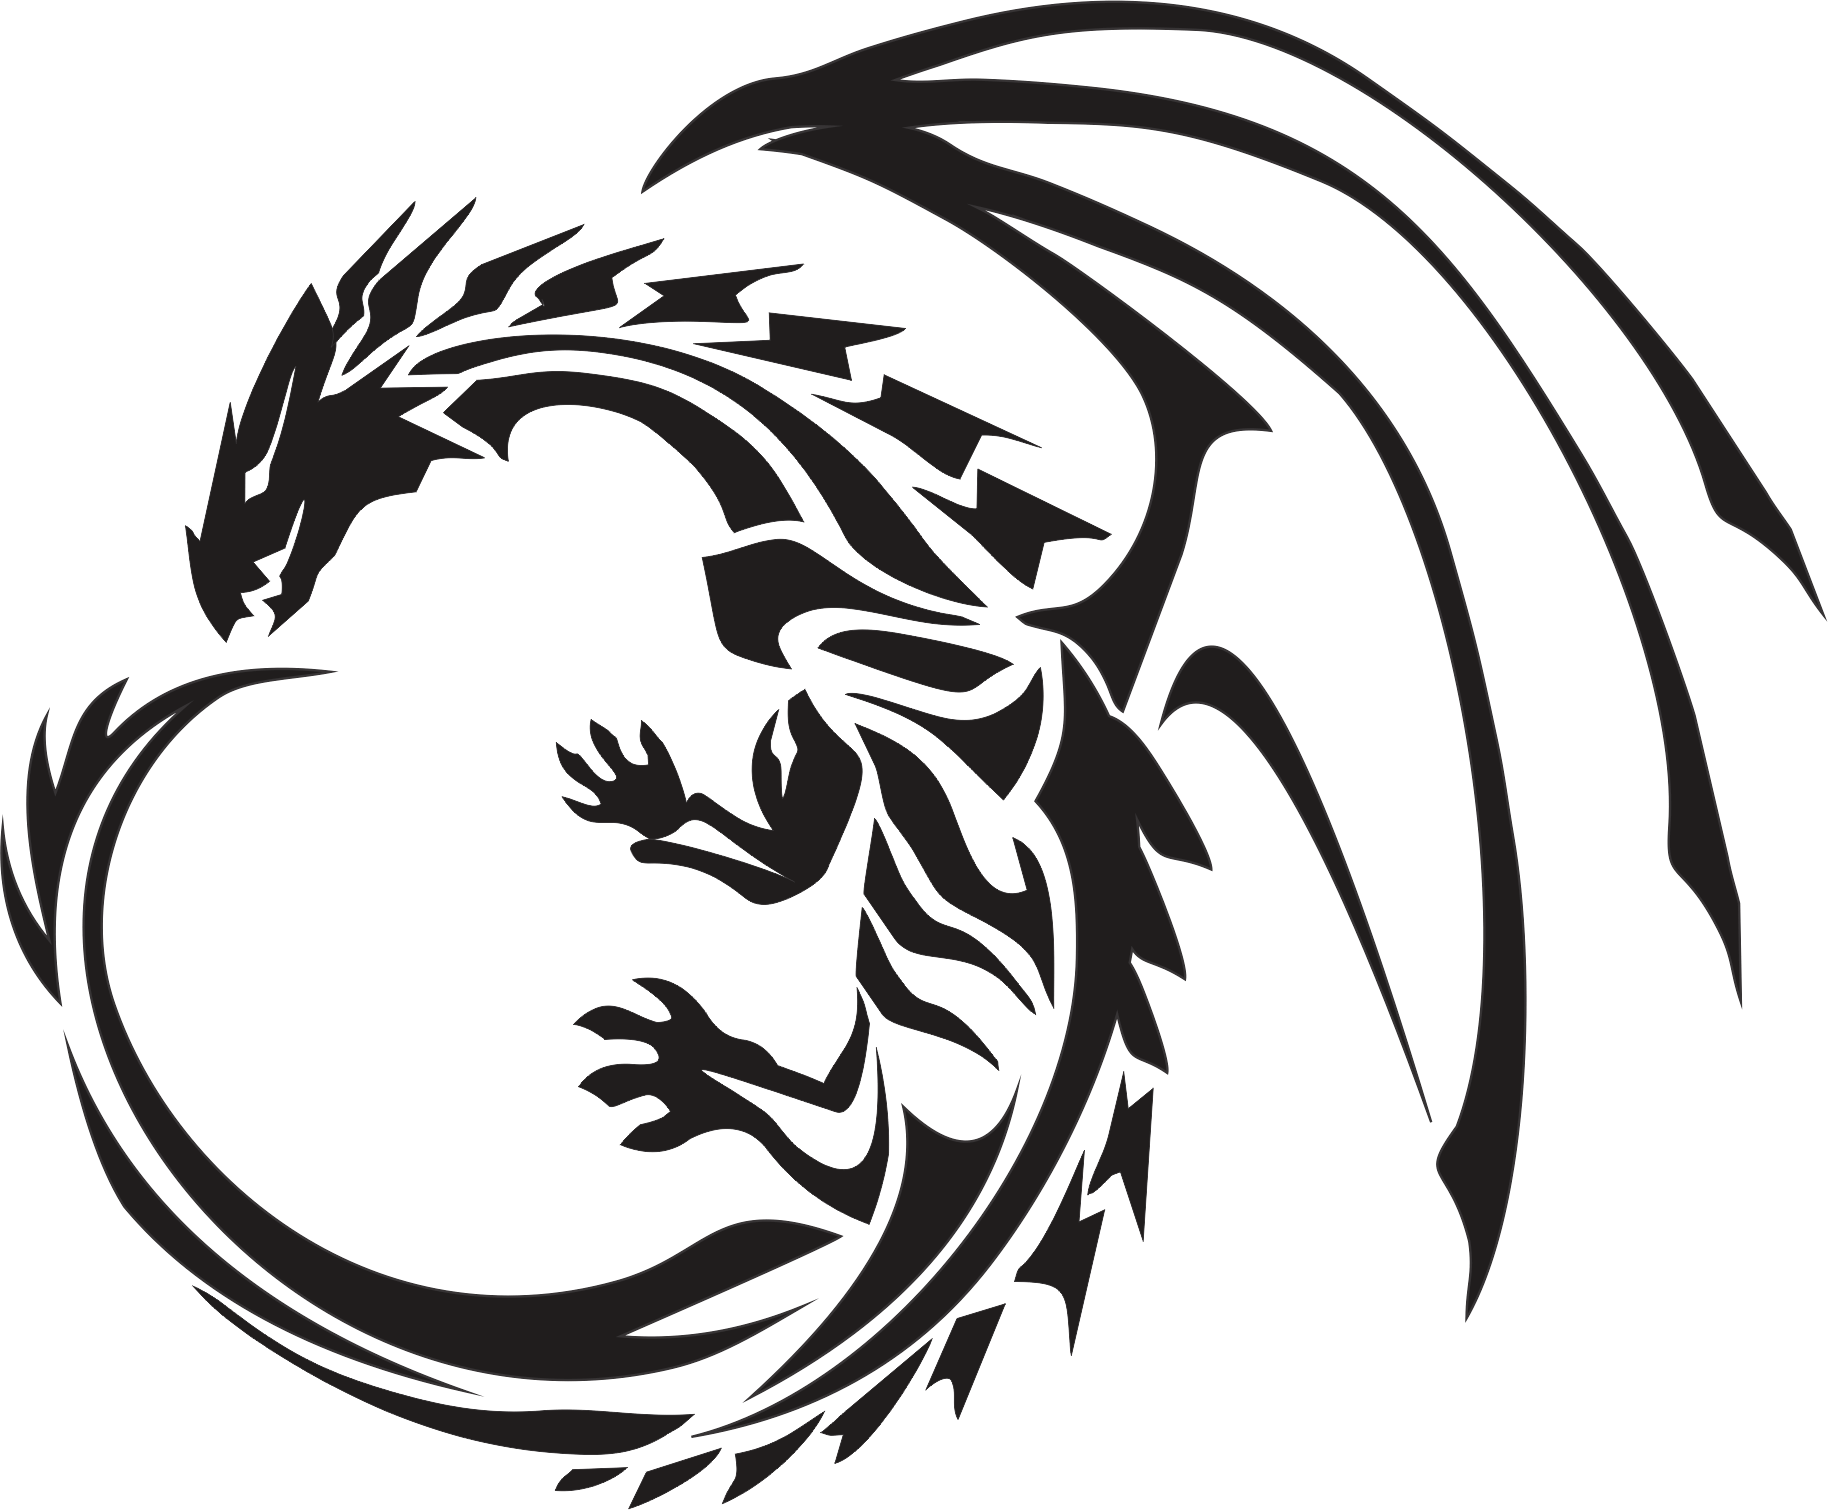 Black Dragon Tattoos PNG HD Quality